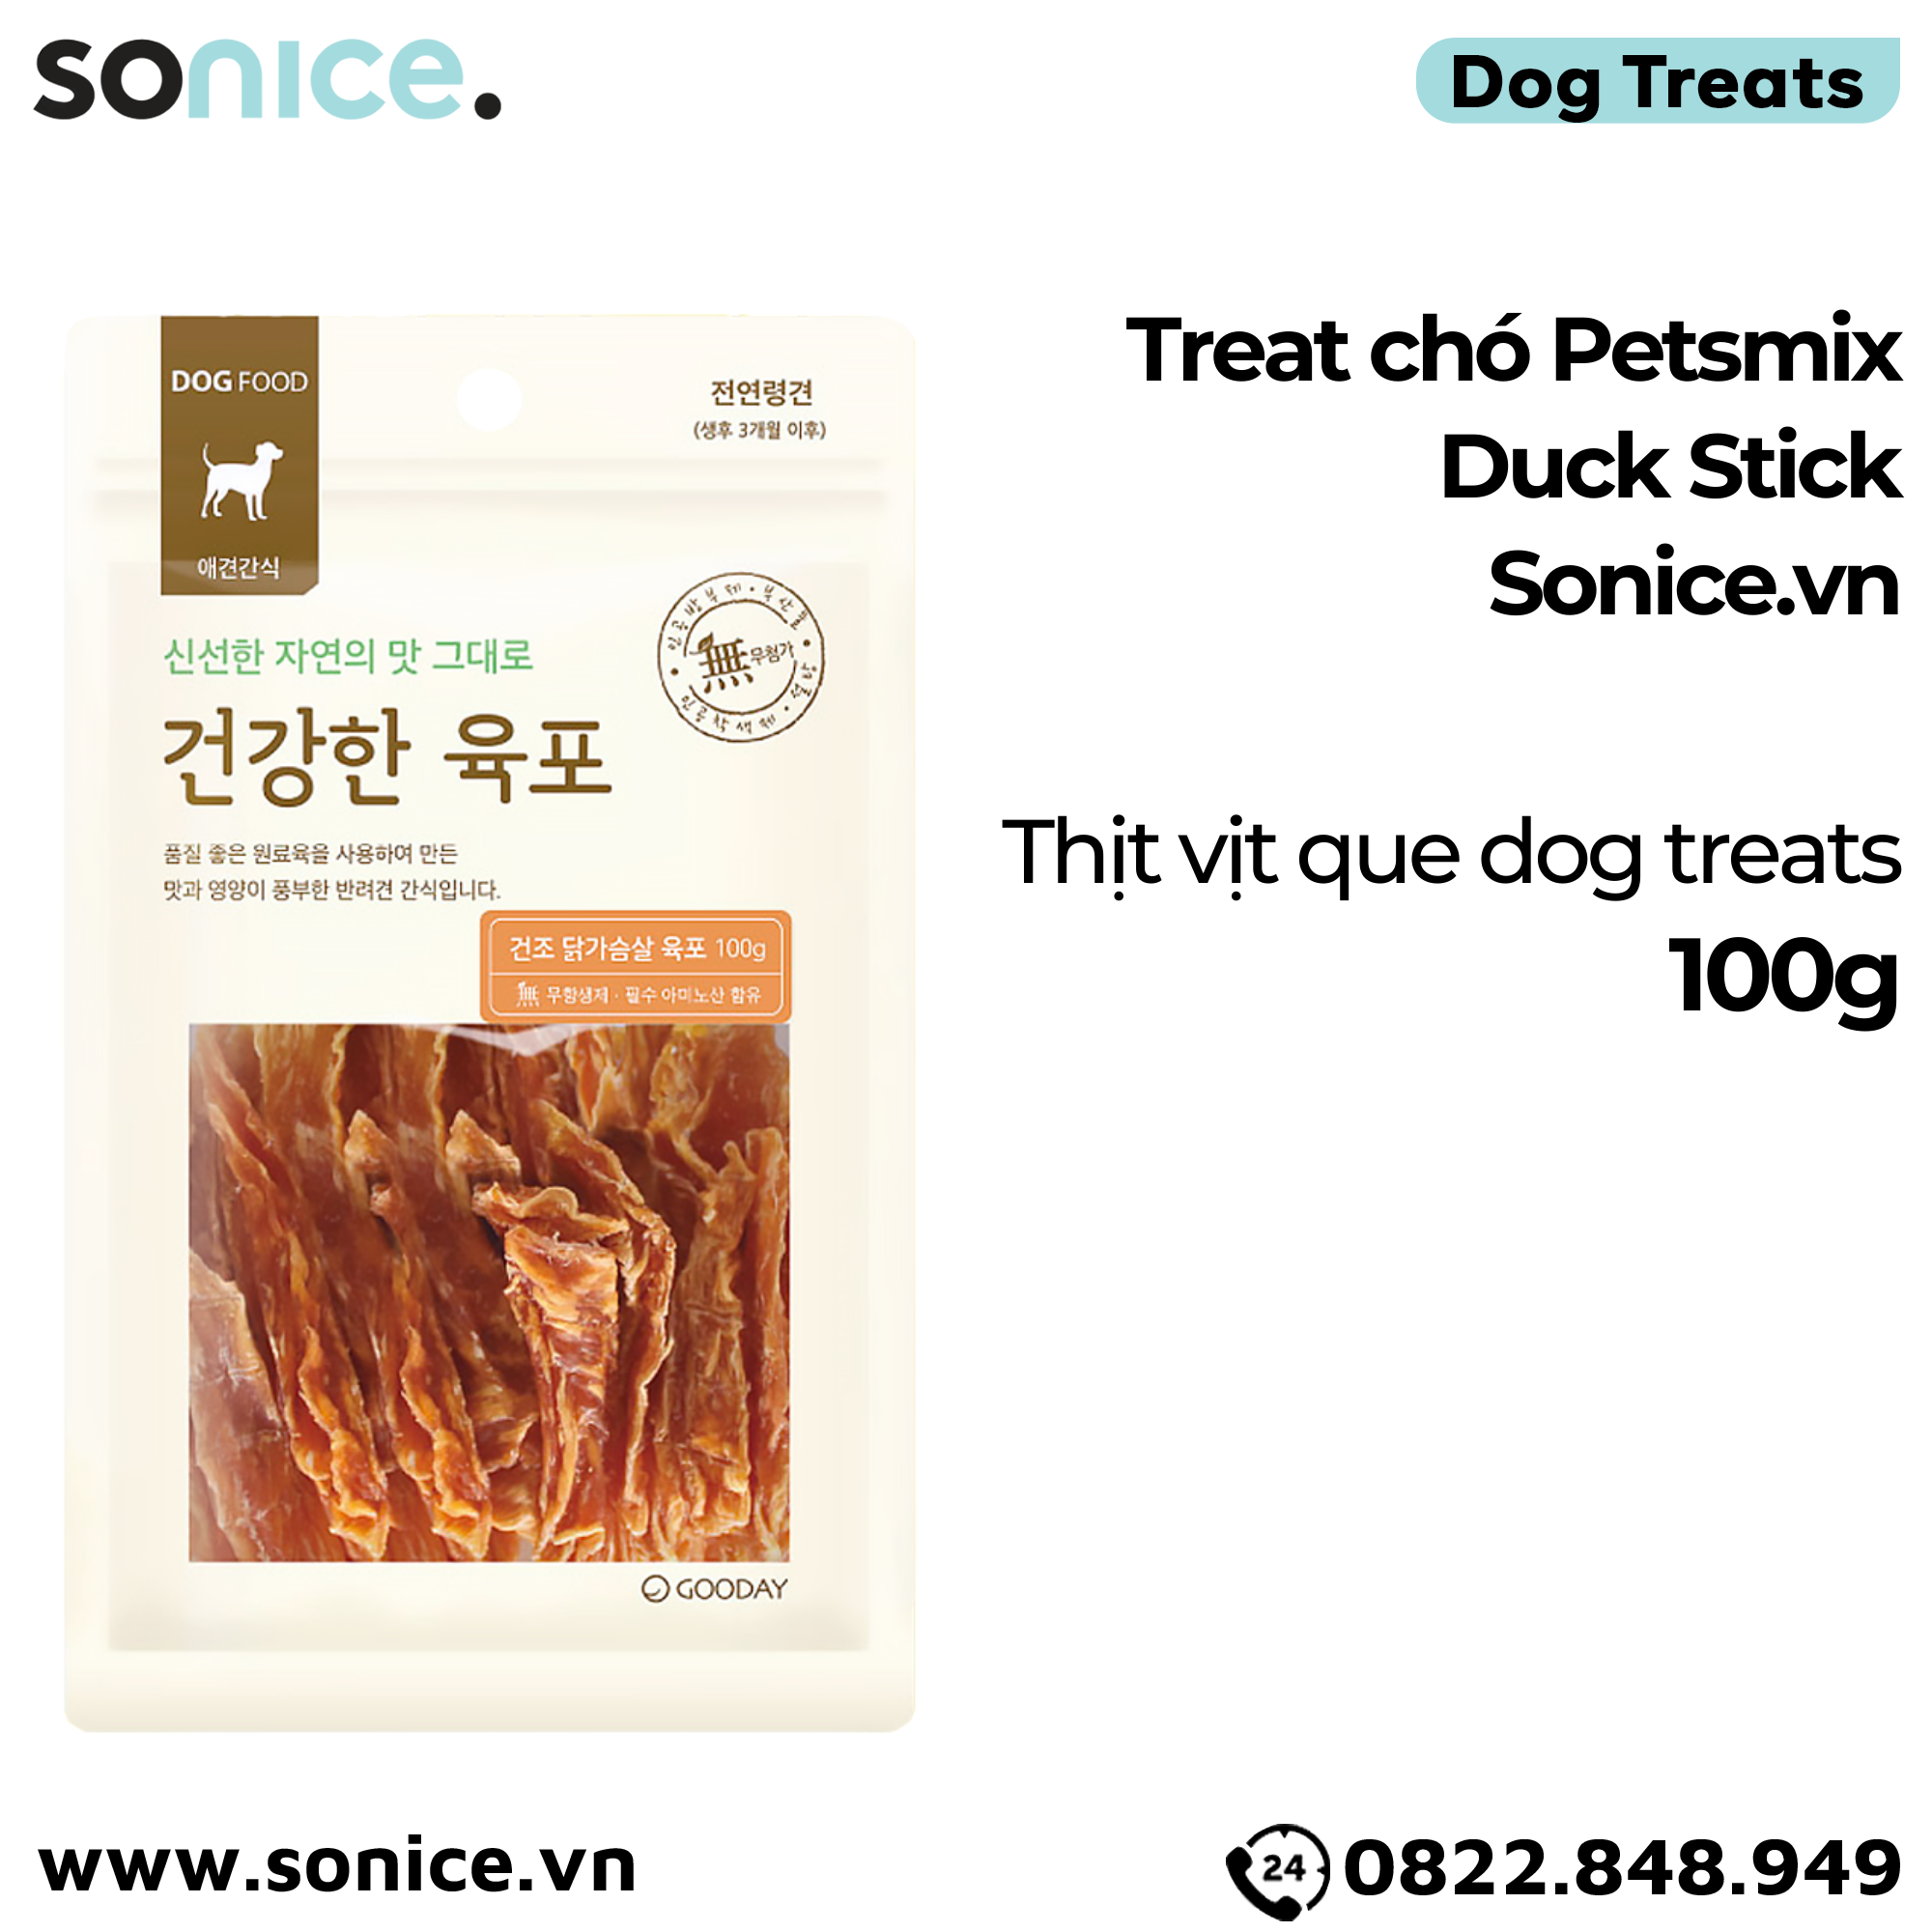  Treat chó Petsmix Duck Stick 100g - thịt vịt que dog treats SONICE. 